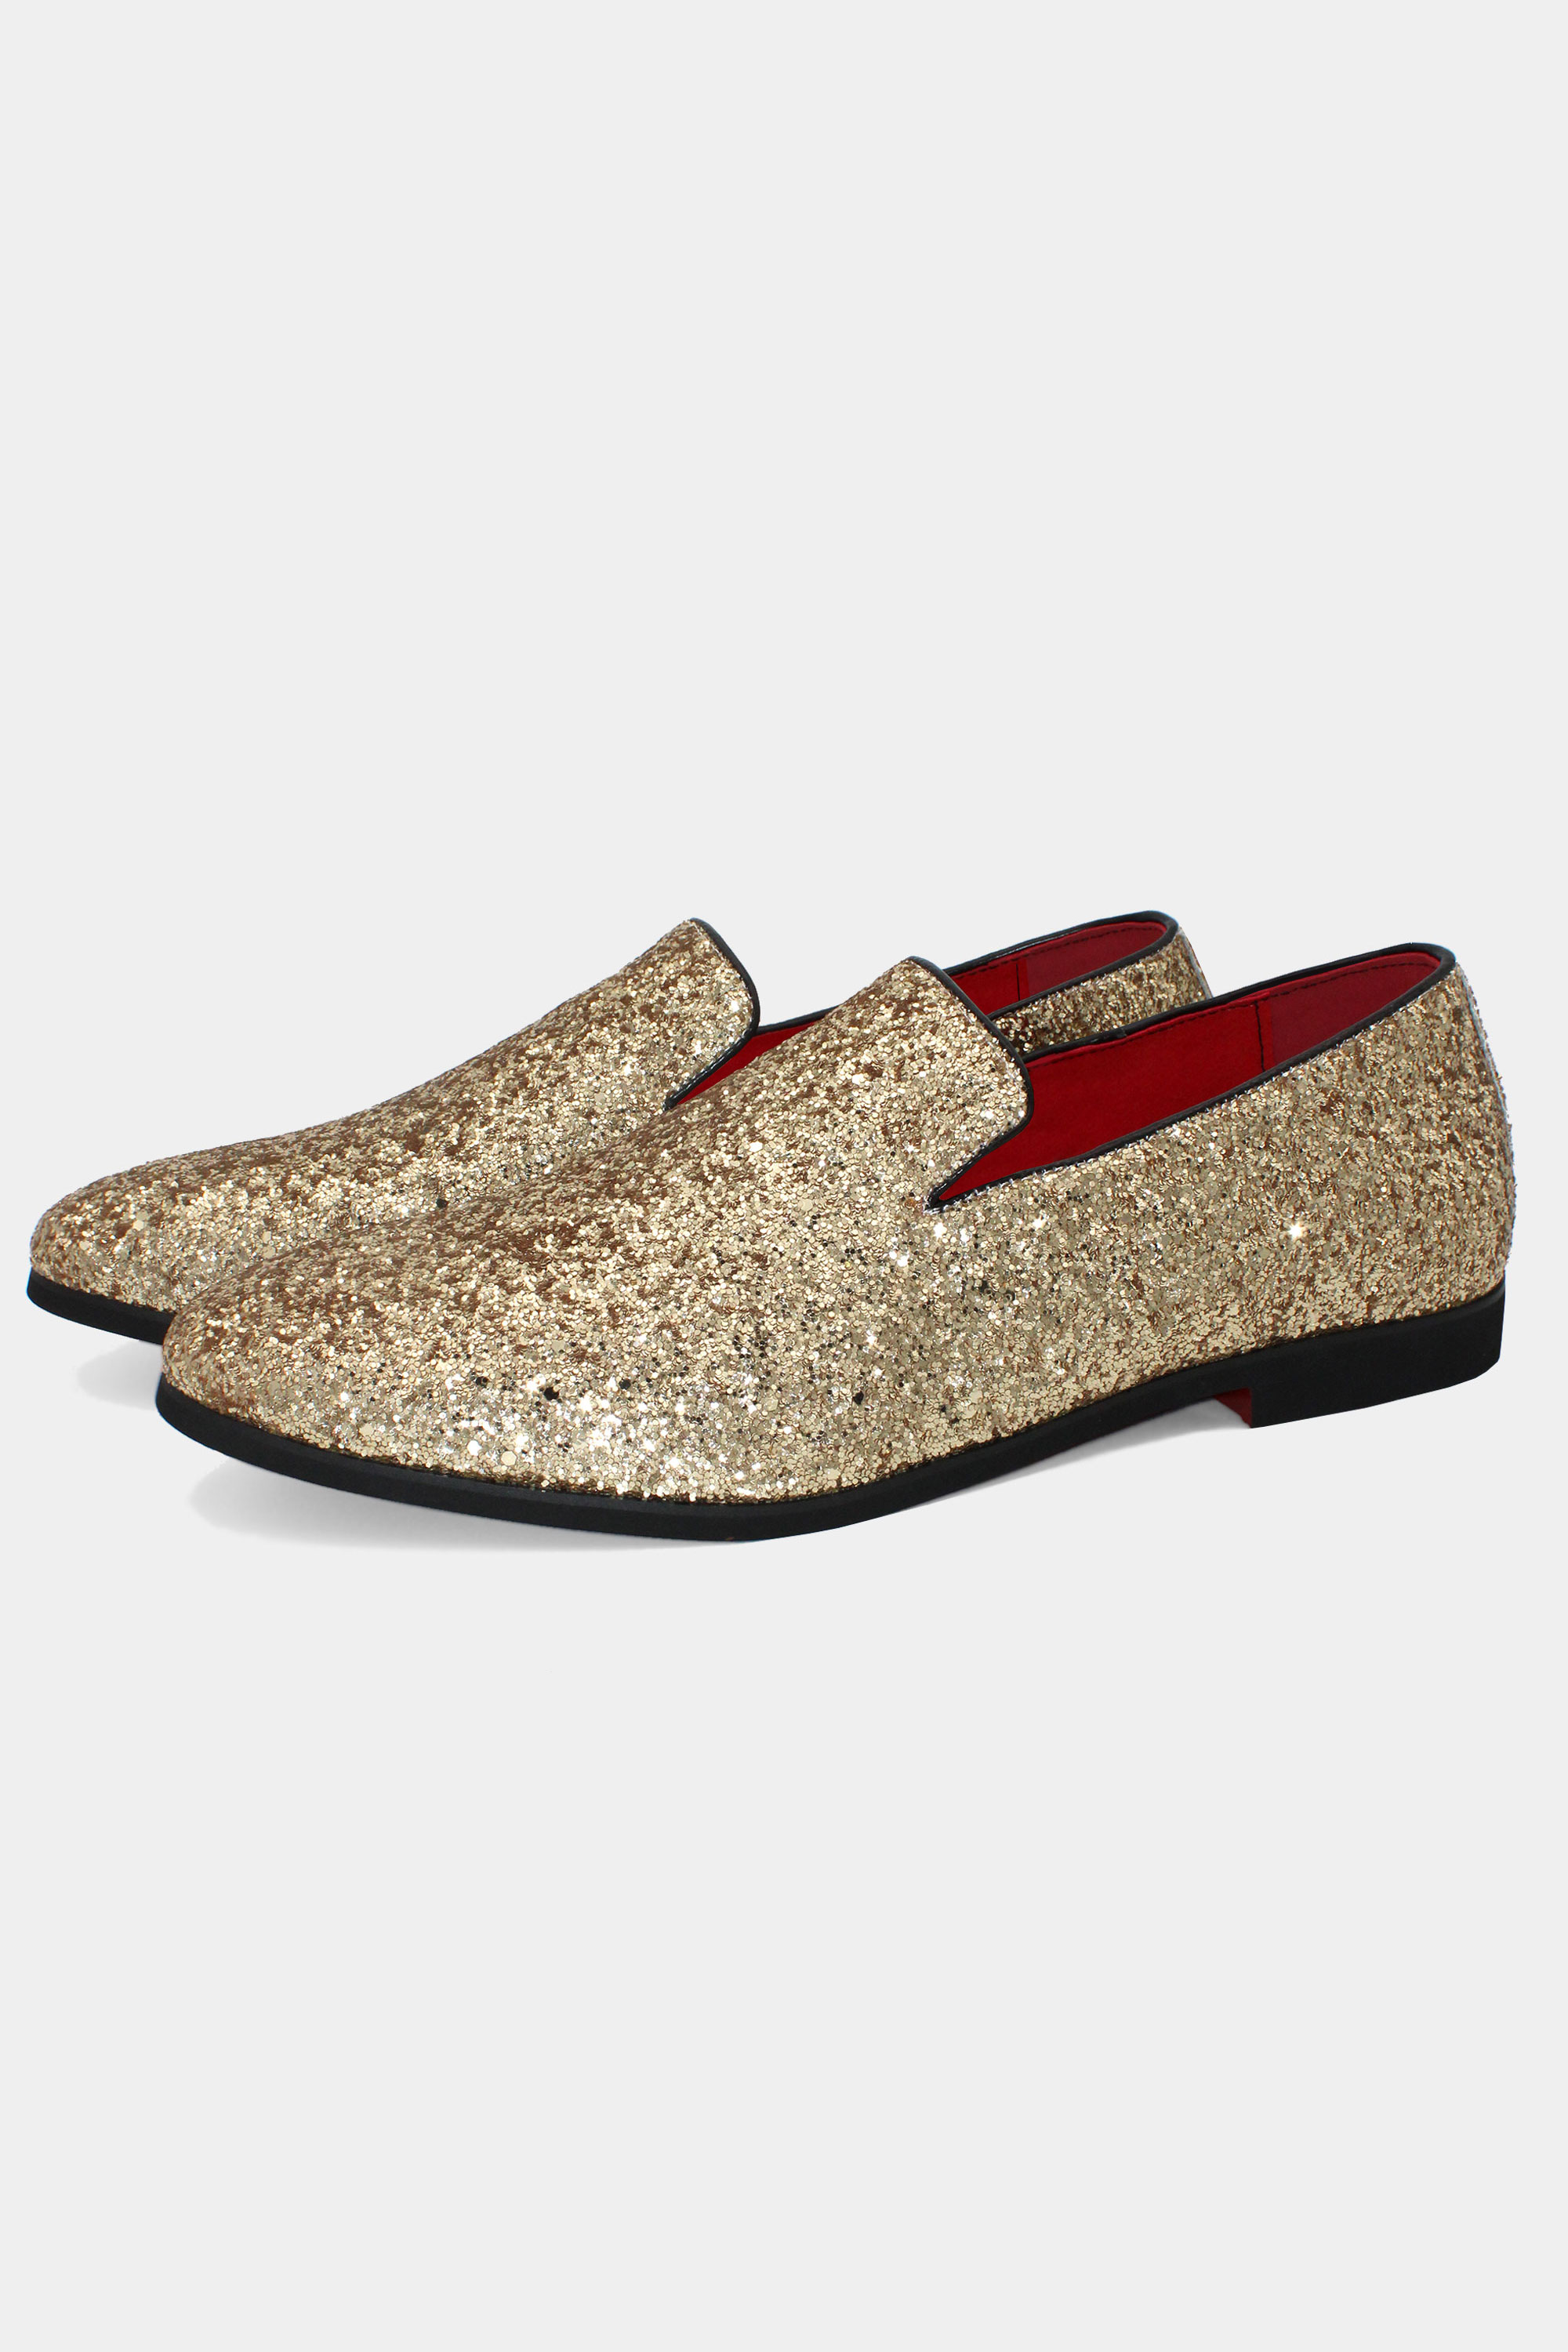 Mens-Gold-GLitter-Shoes-Loafer-GrooProm-Wedding-Shoes-from-Gentlemansguru.com